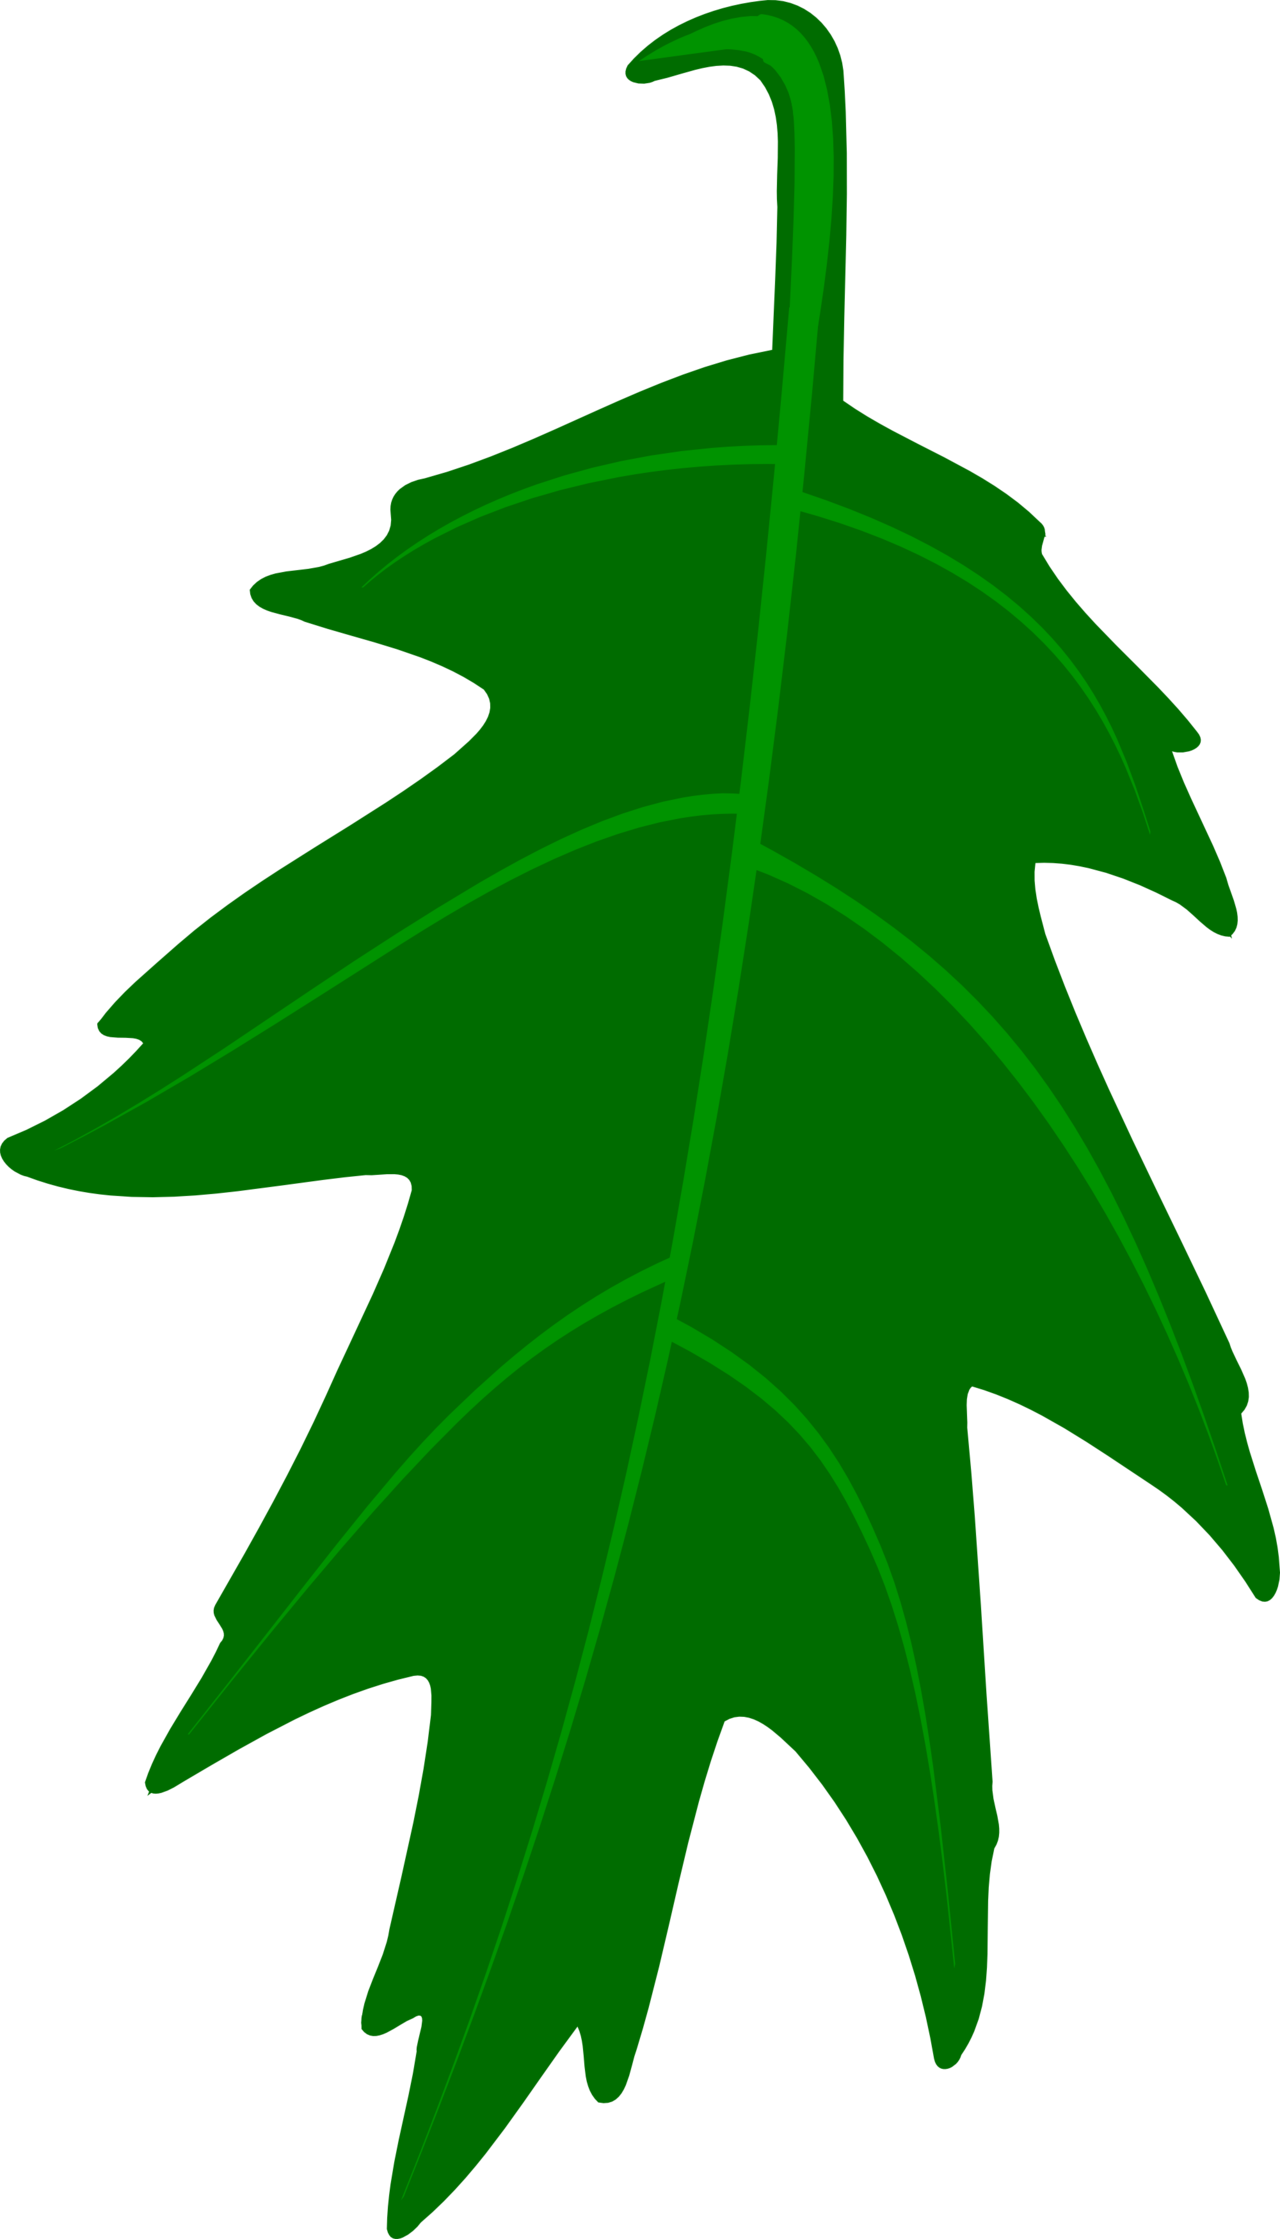 Oak Leaf Vector